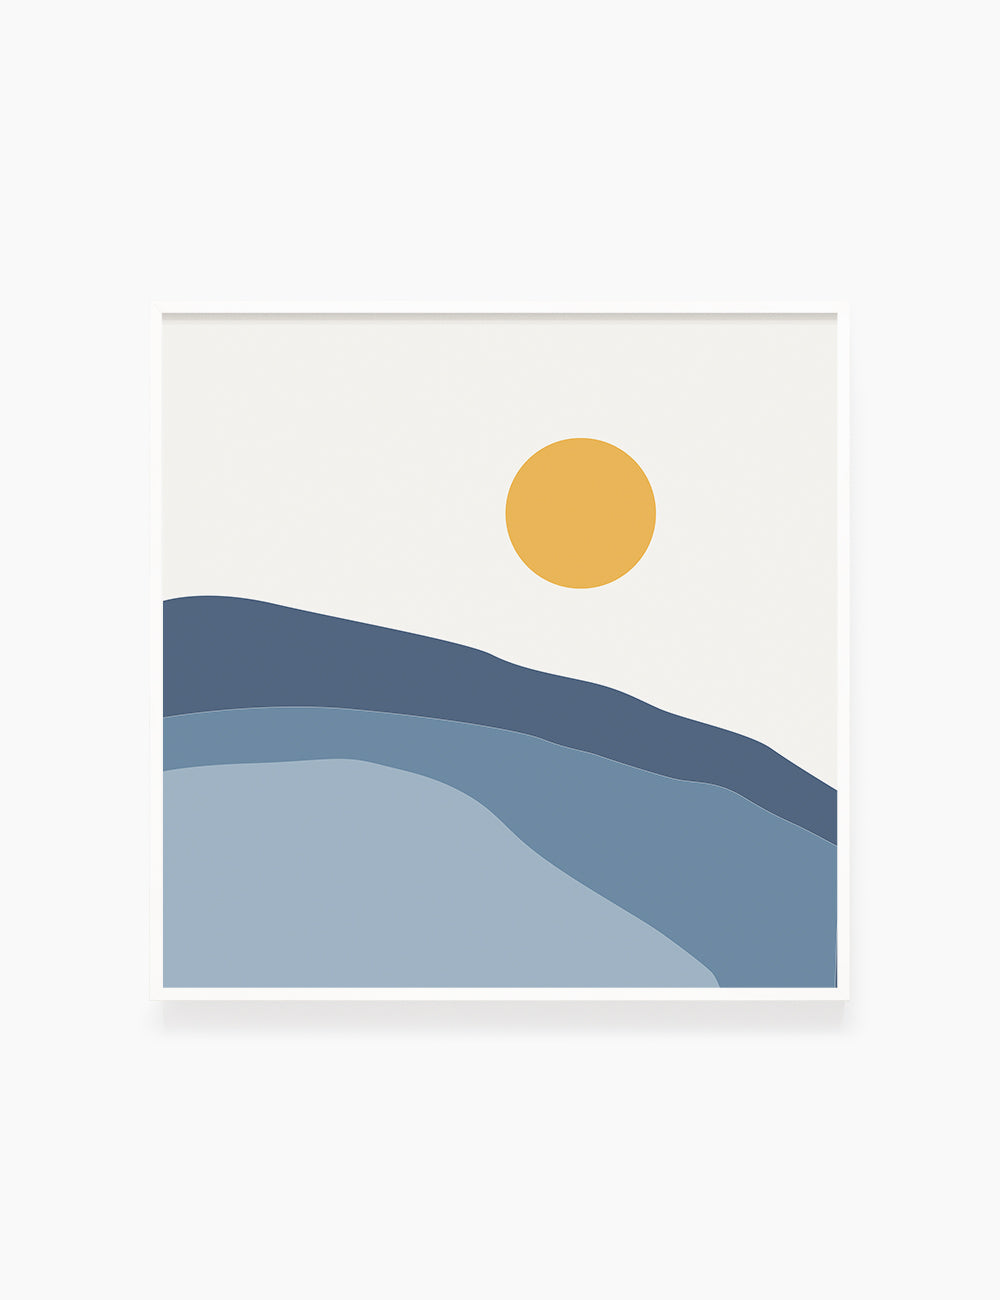 SUN OVER THE BLUE OCEAN LANDSCAPE. BOHO ART. Minimalist. Abstract. Printable Wall Art Illustration. - PAPER MOON Art & Design